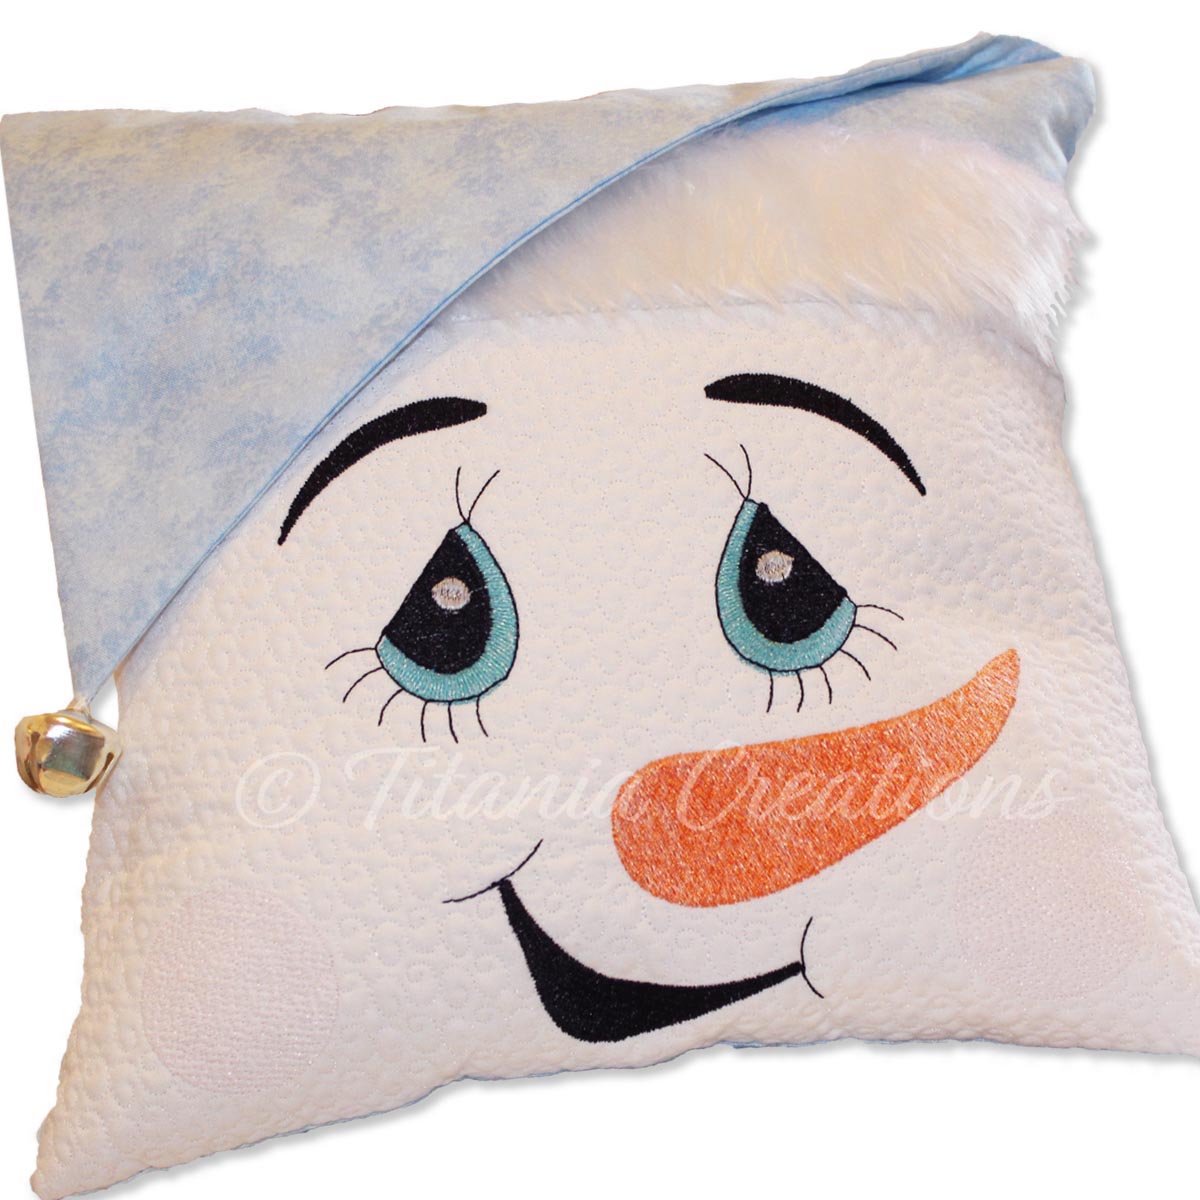 Snowman Pillow Project 8x12